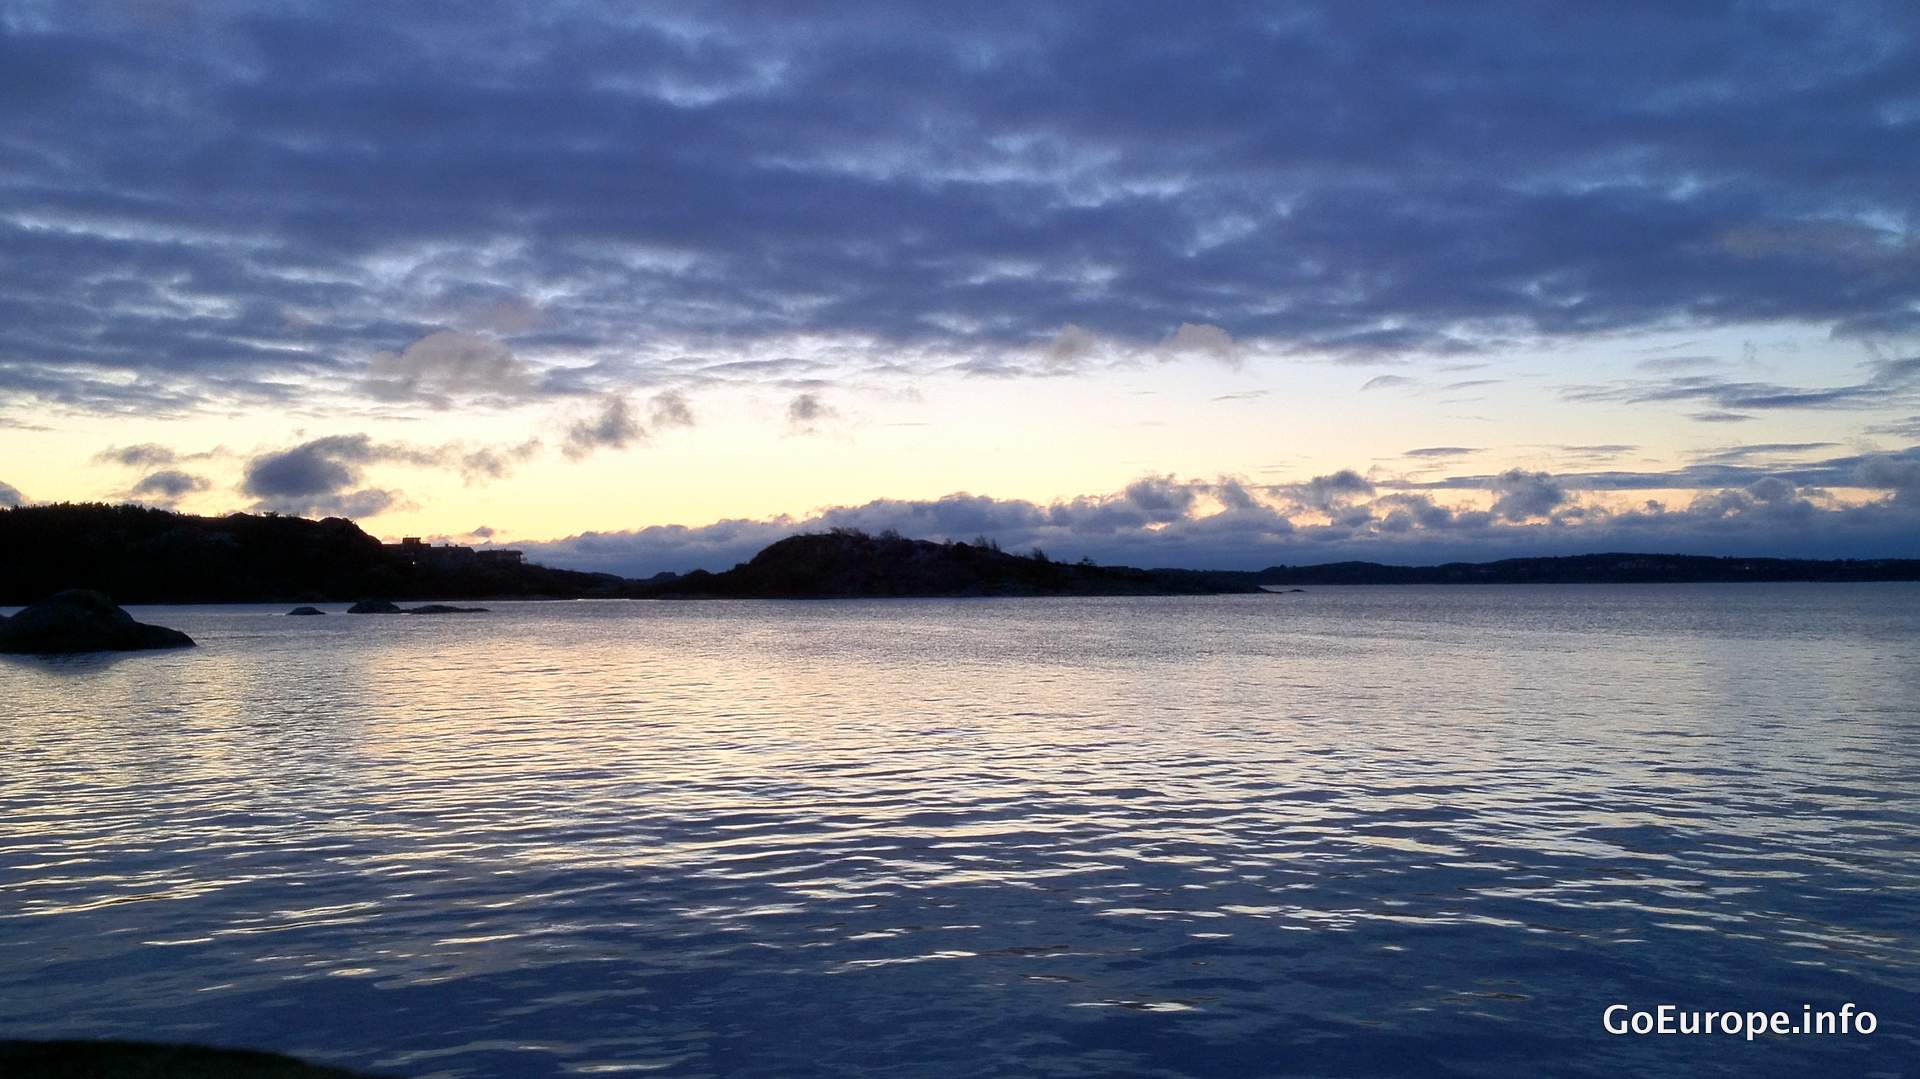 Gothenburg archipelago during evening